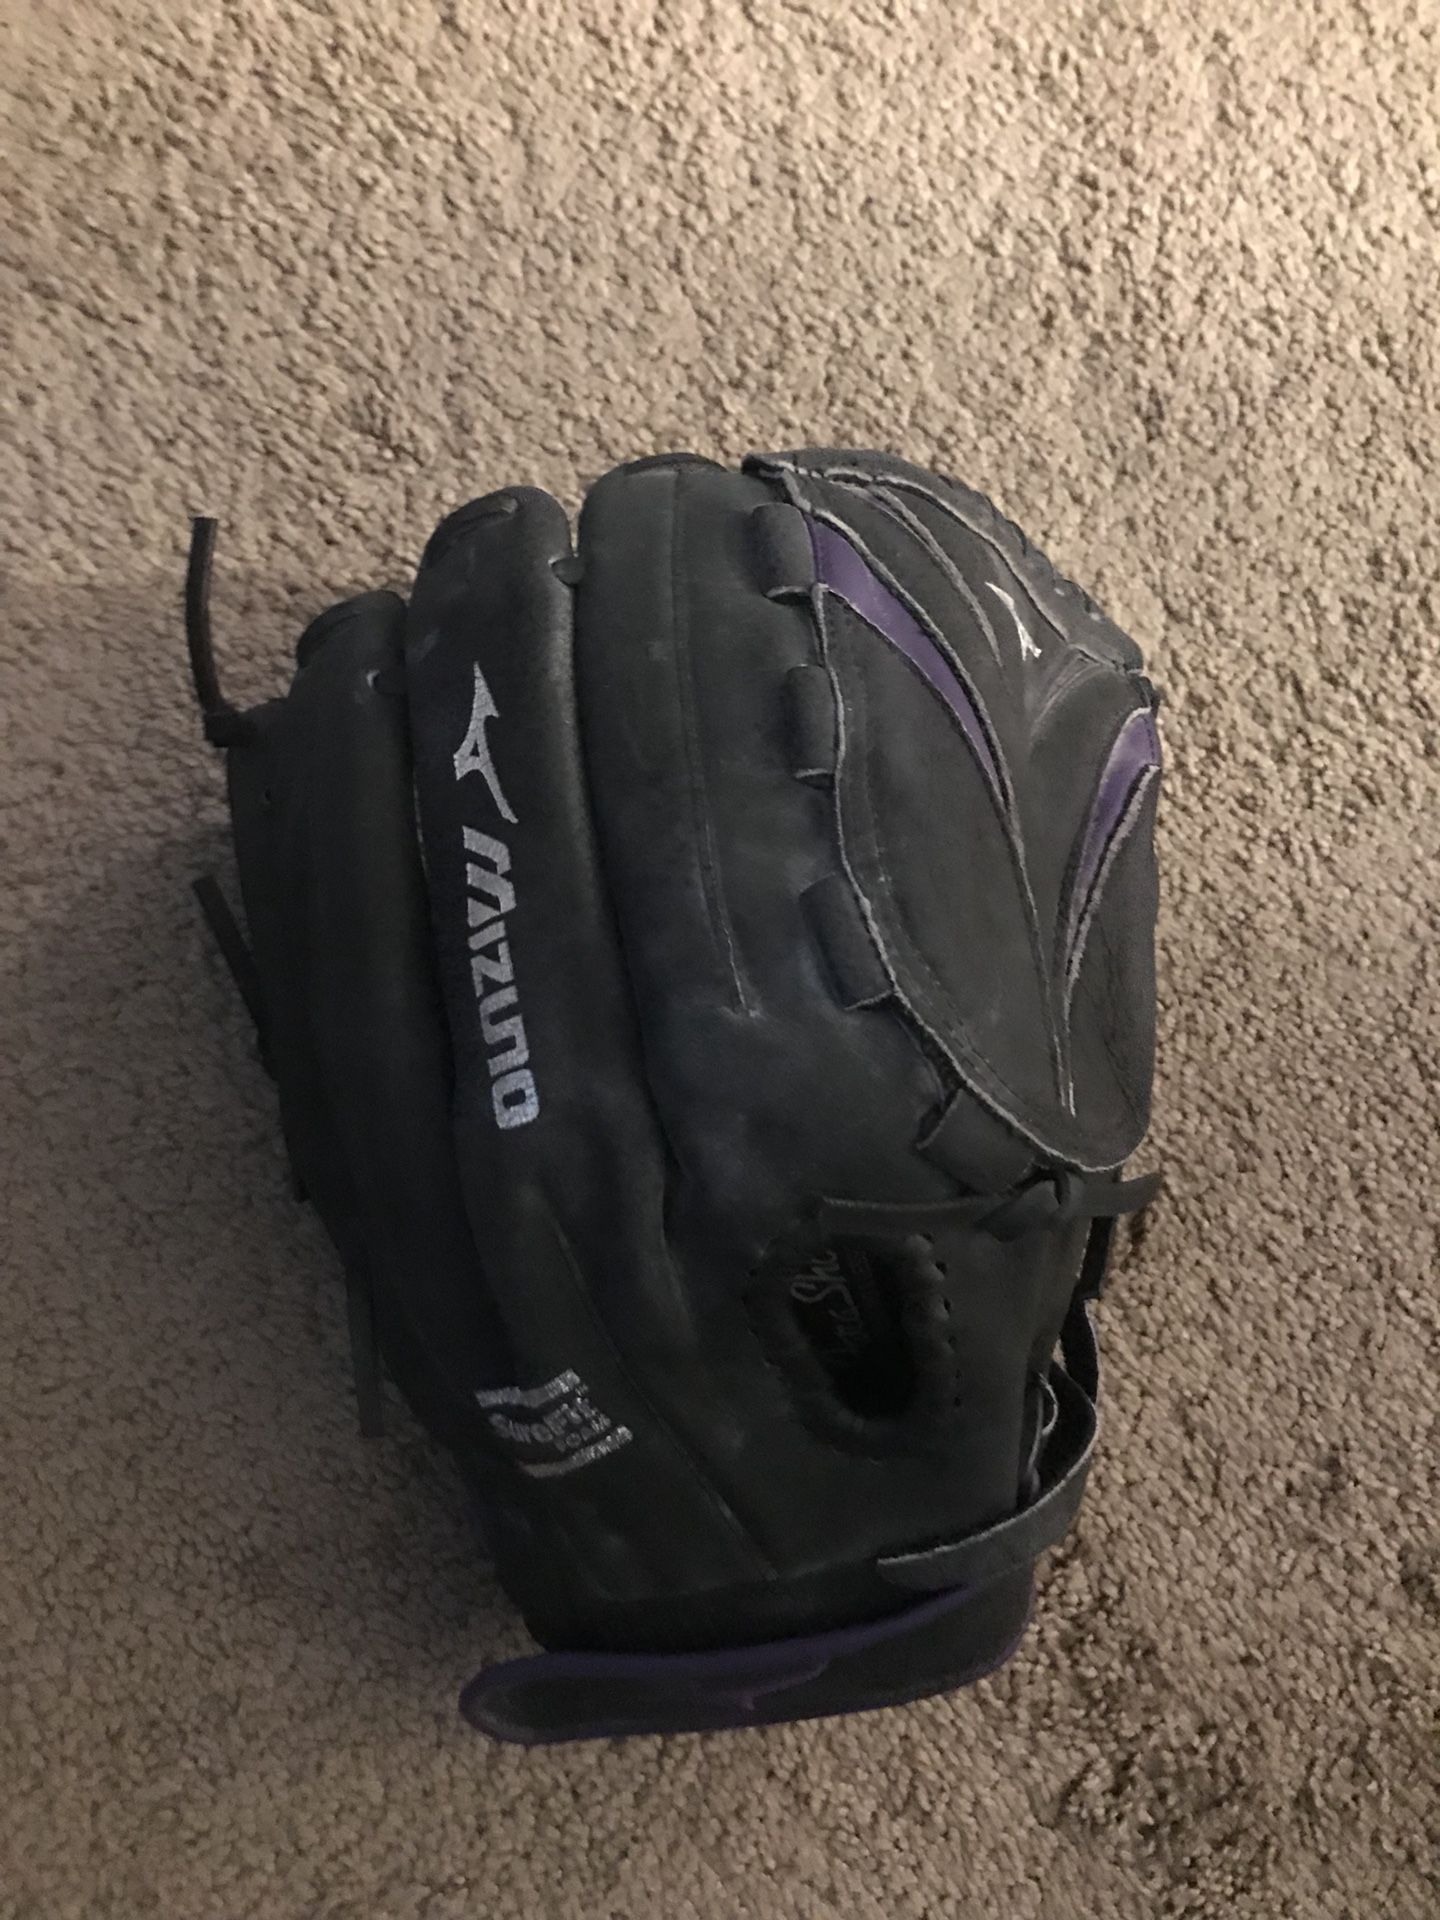 Jenny Finch 12” softball glove